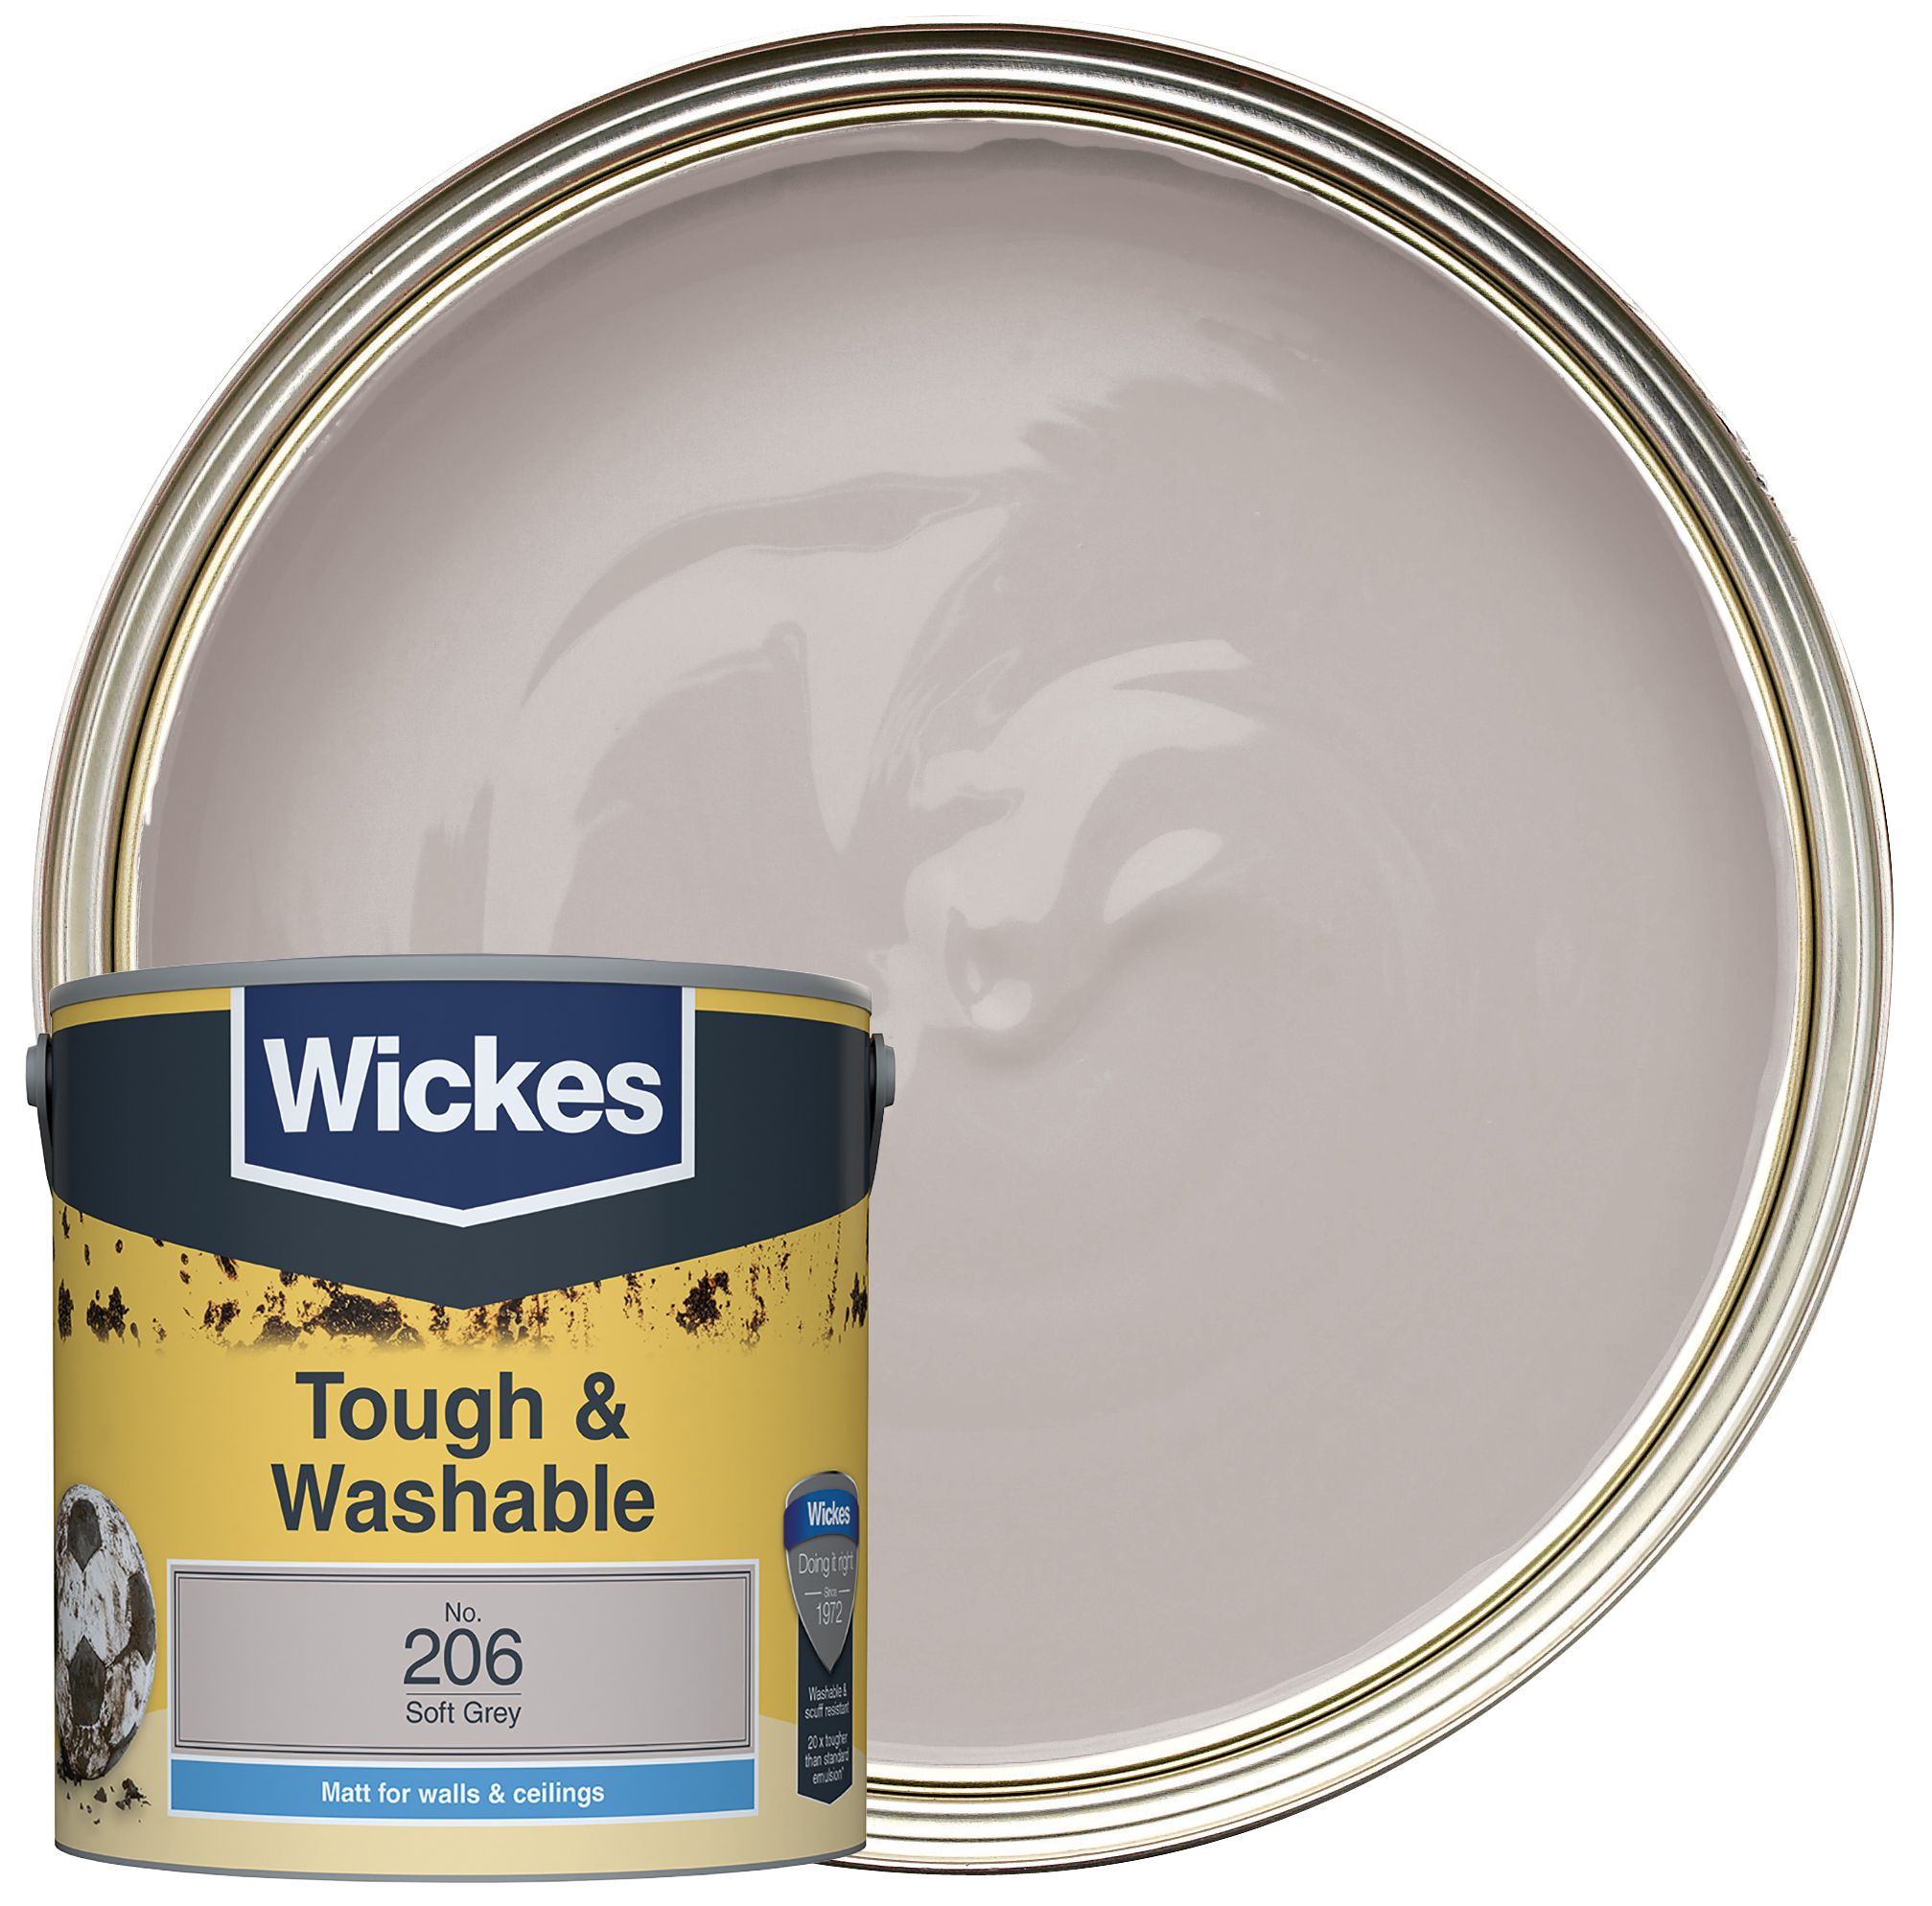 Wickes Soft Grey - No. 206 Tough & Washable Matt Emulsion Paint - 2.5L